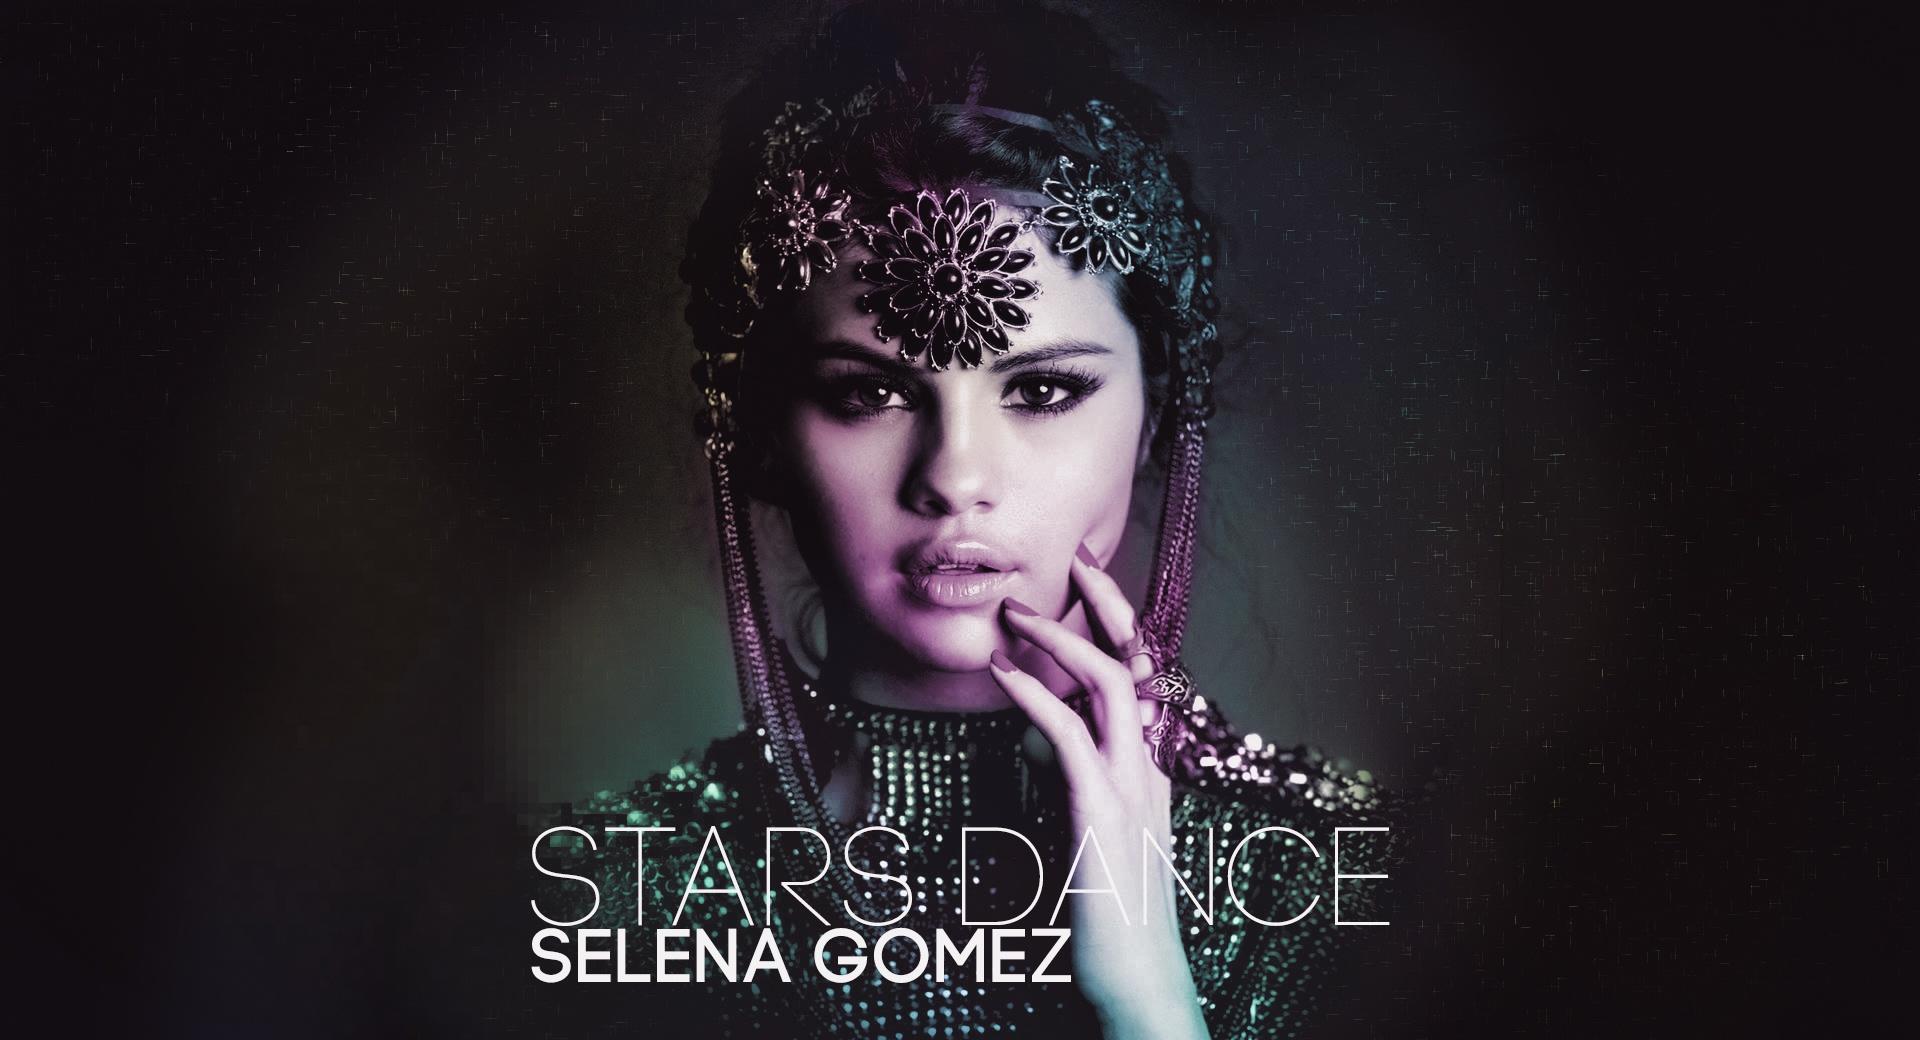 Selena Gomez - Stars Dance at 1024 x 1024 iPad size wallpapers HD quality